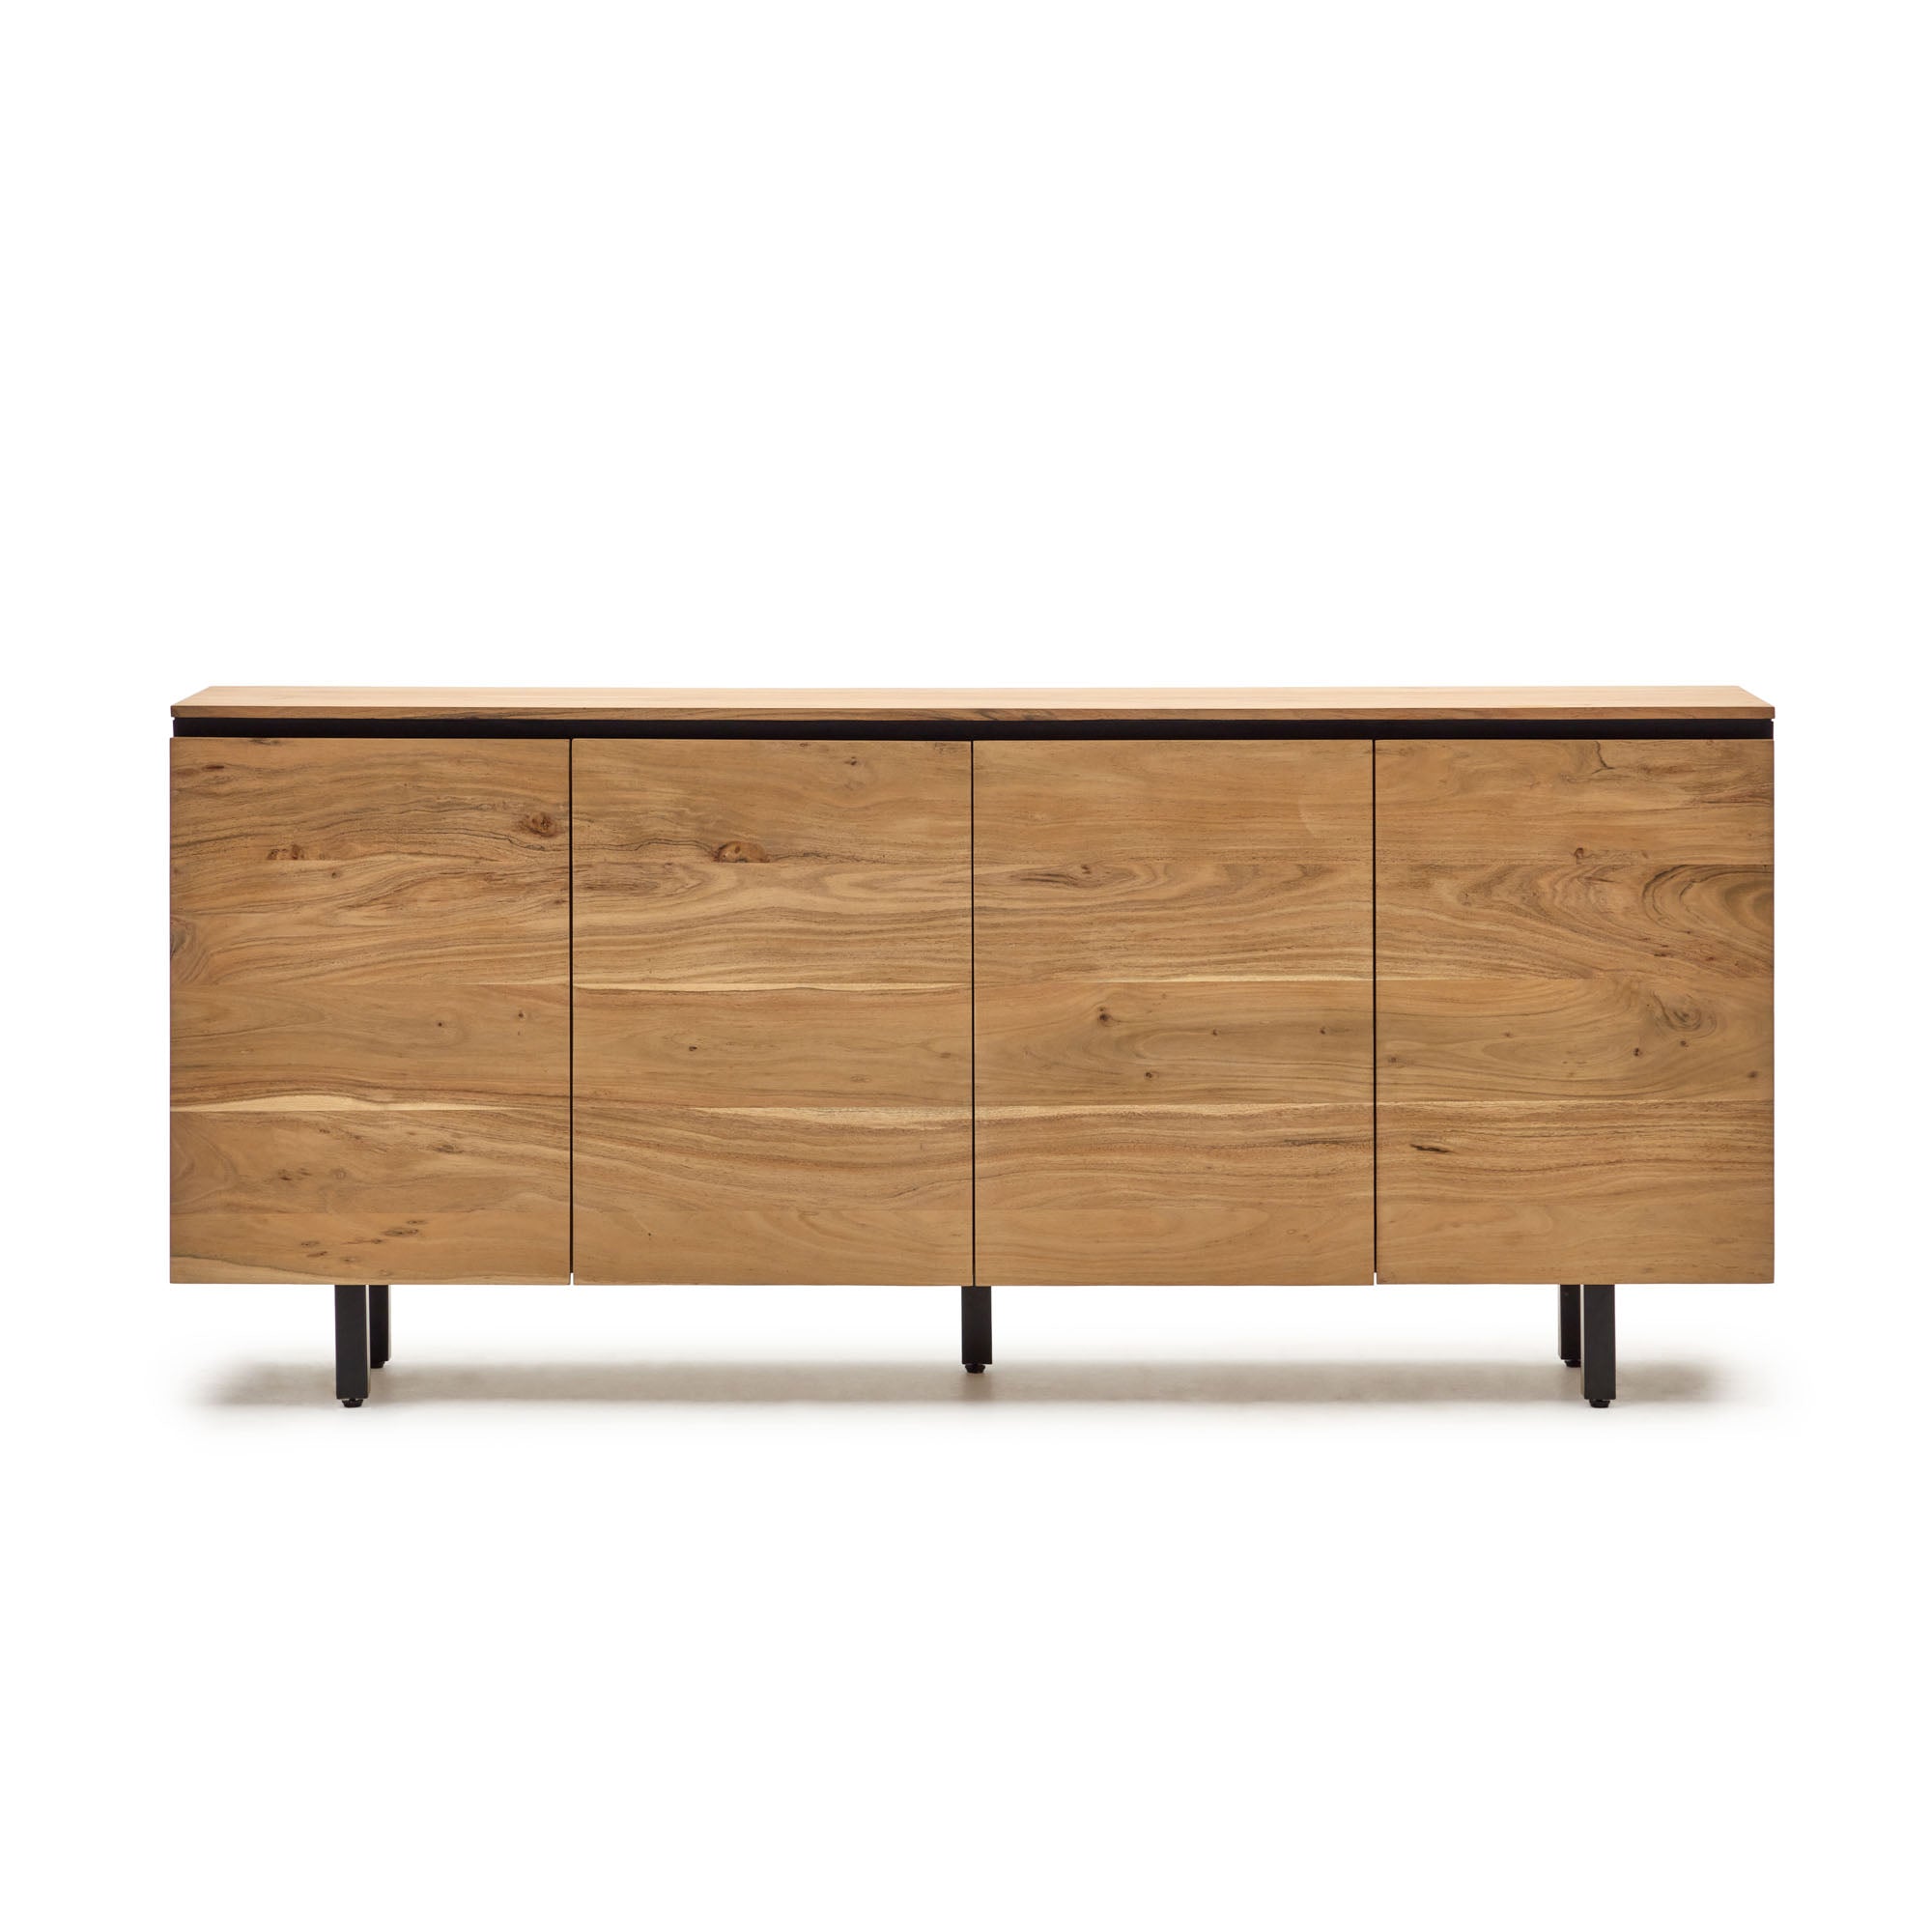 Uxue solid acacia wood 4 door sideboard in a natural finish, 200 x 88 cm